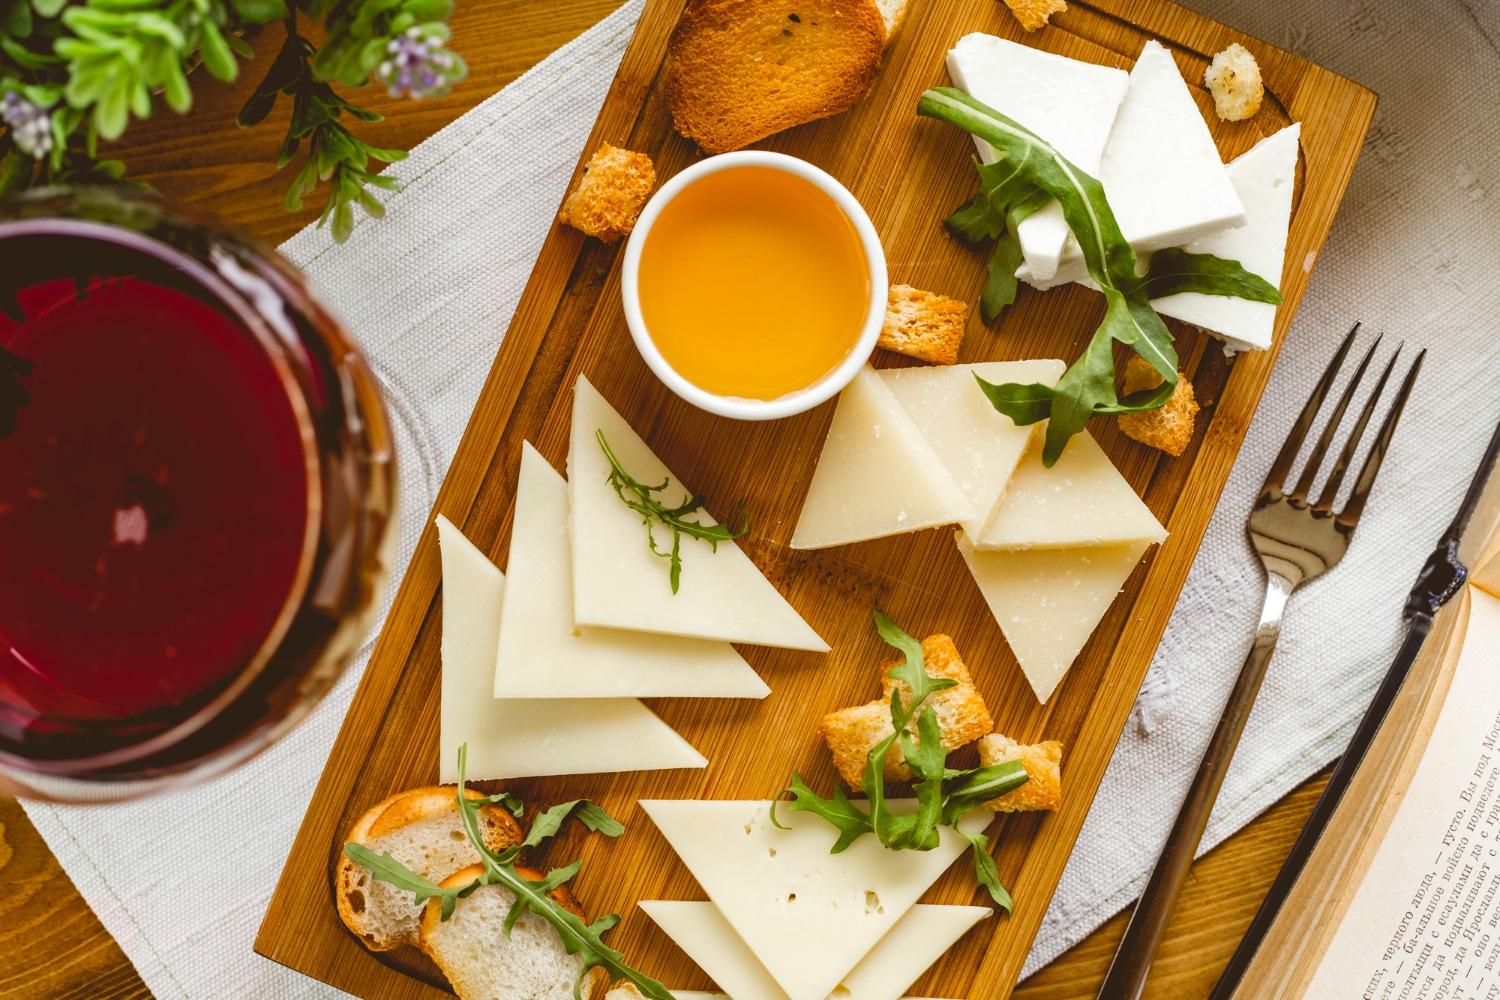 Murray’s Cheese A Gourmet Journey Through Artisan Cheeses